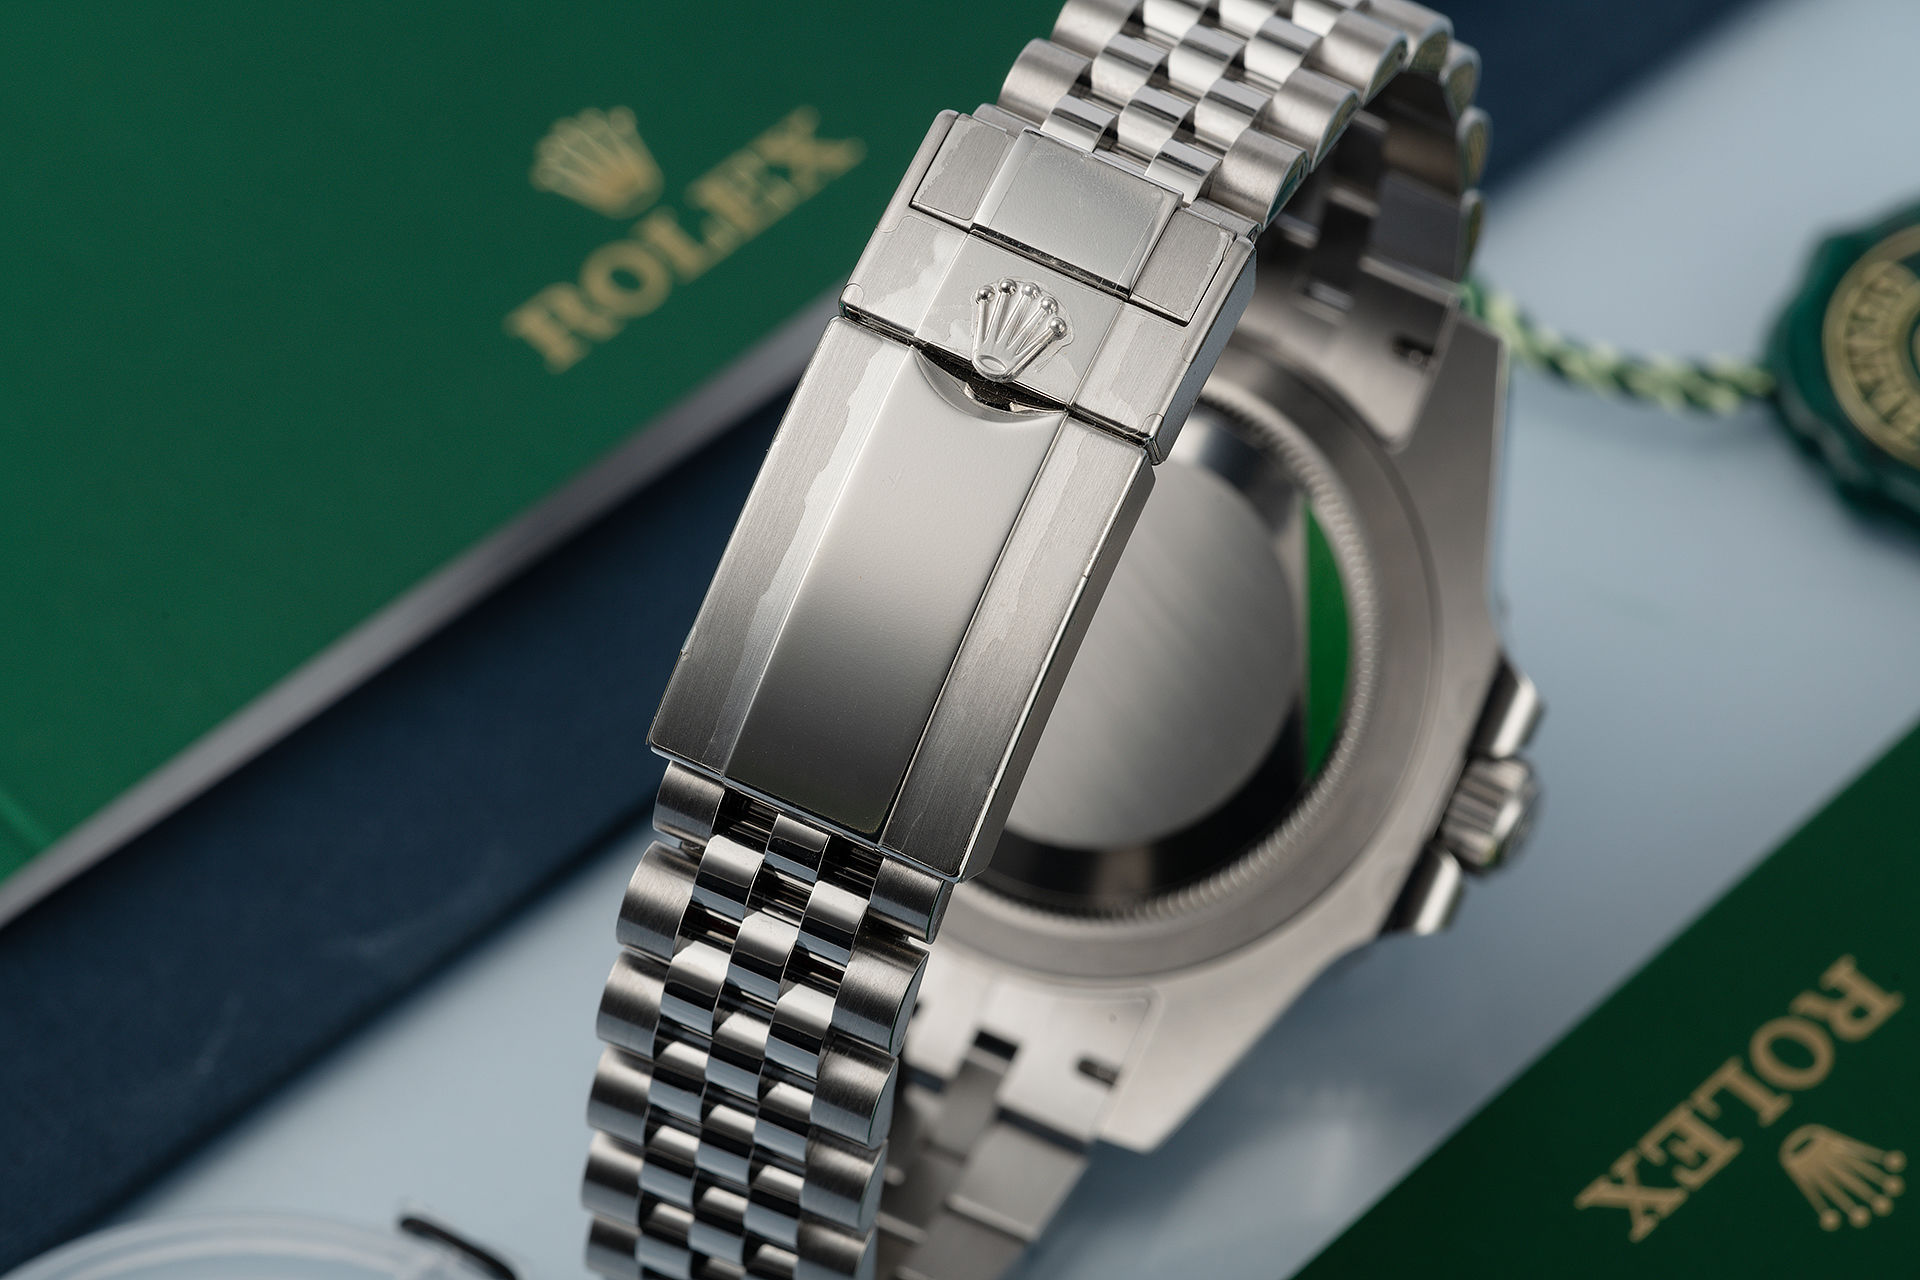 ref 126710BLNR | 'Brand New' 5 Year Warranty | Rolex GMT-Master II